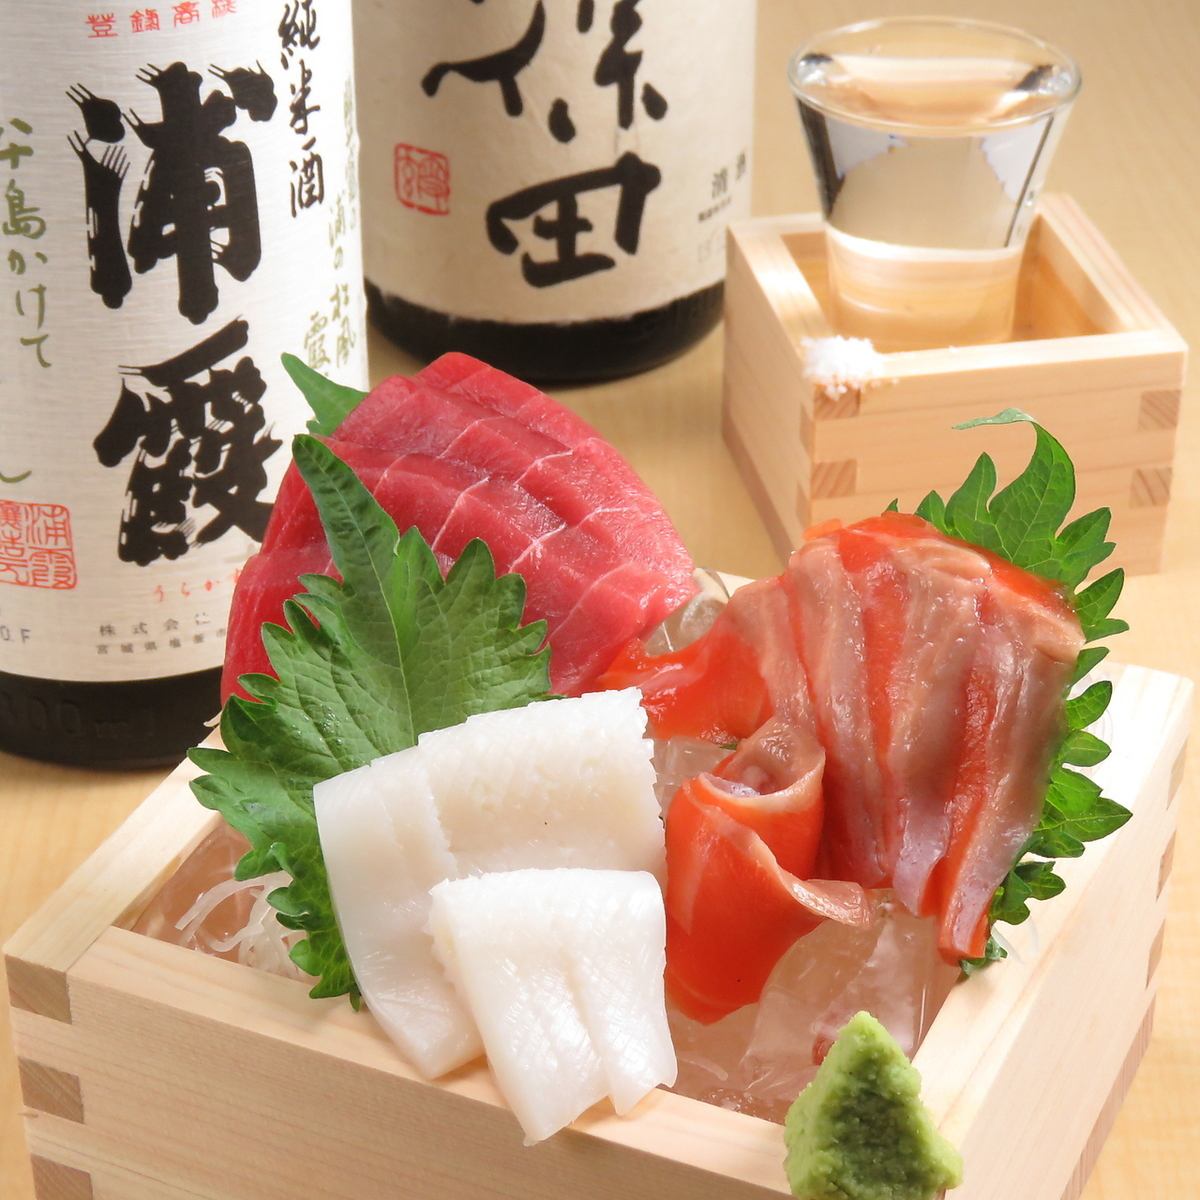 Enjoy fresh sashimi!